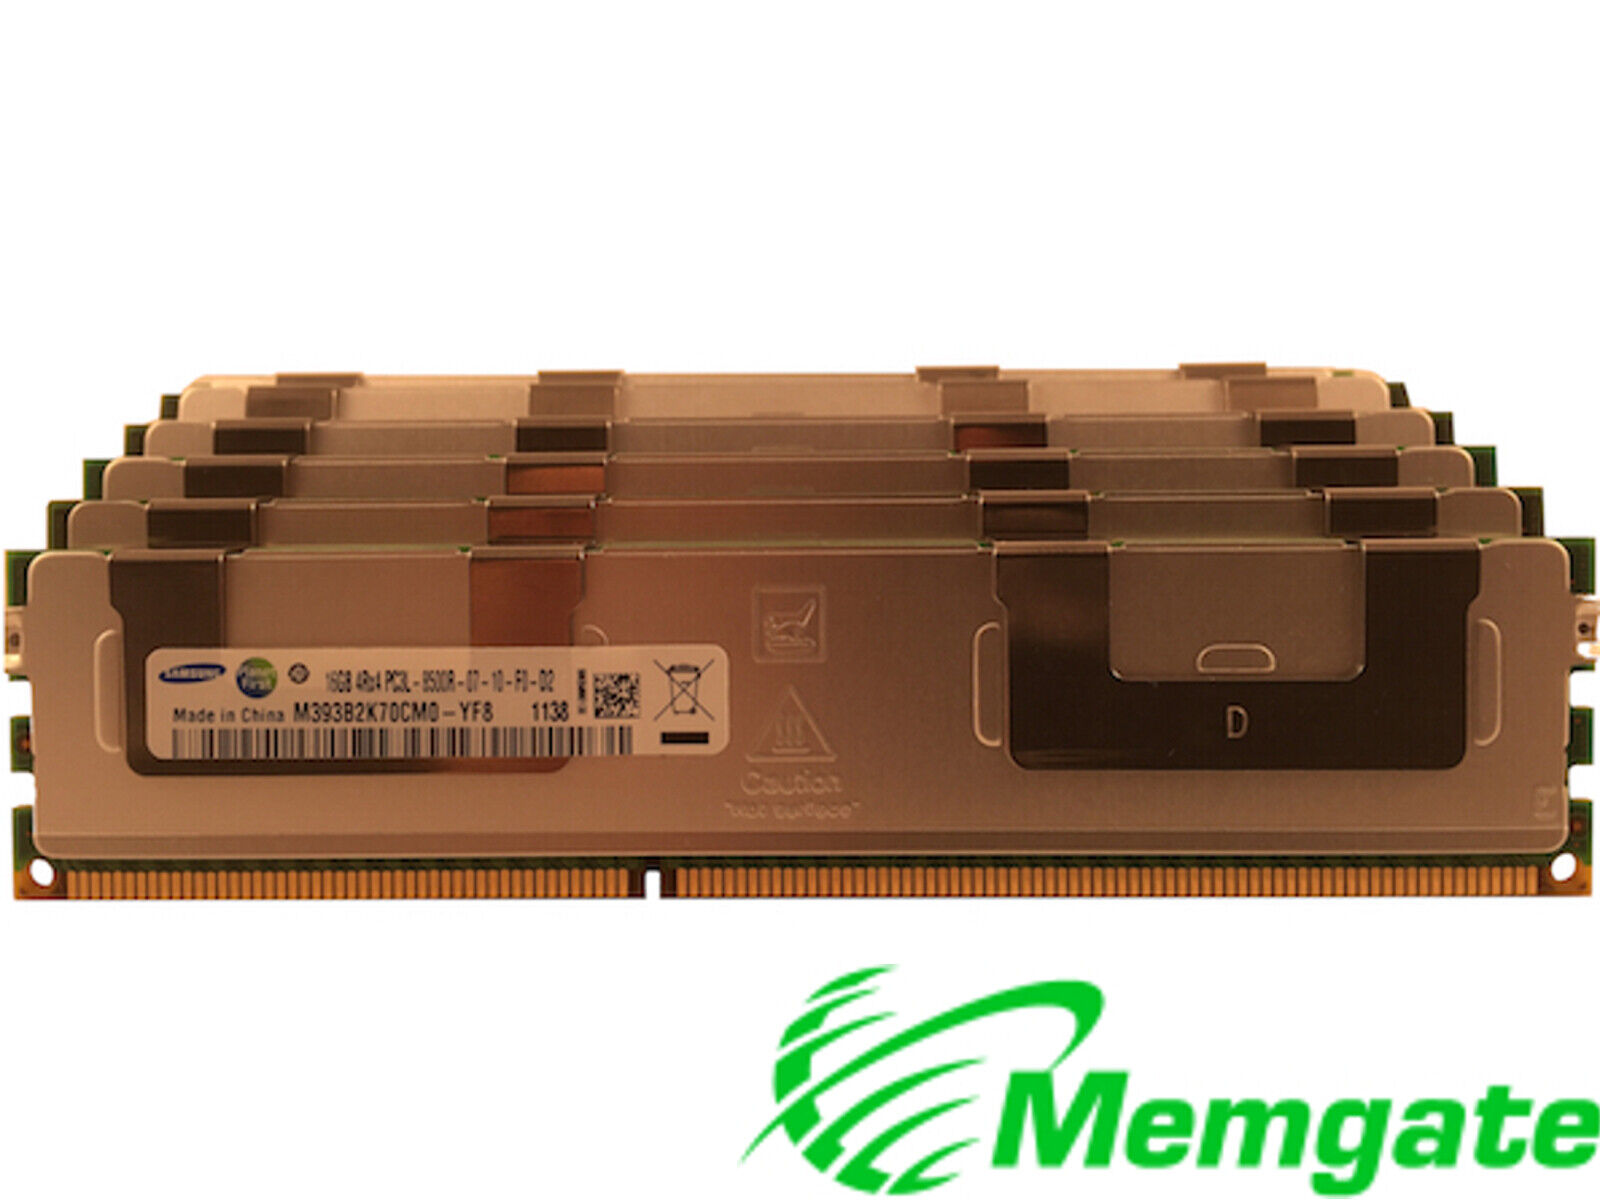 64GB (4x16GB) PC3-8500R 4Rx4 DDR3 ECC Reg Memory for Apple Mac Pro Mid 2010 5,1